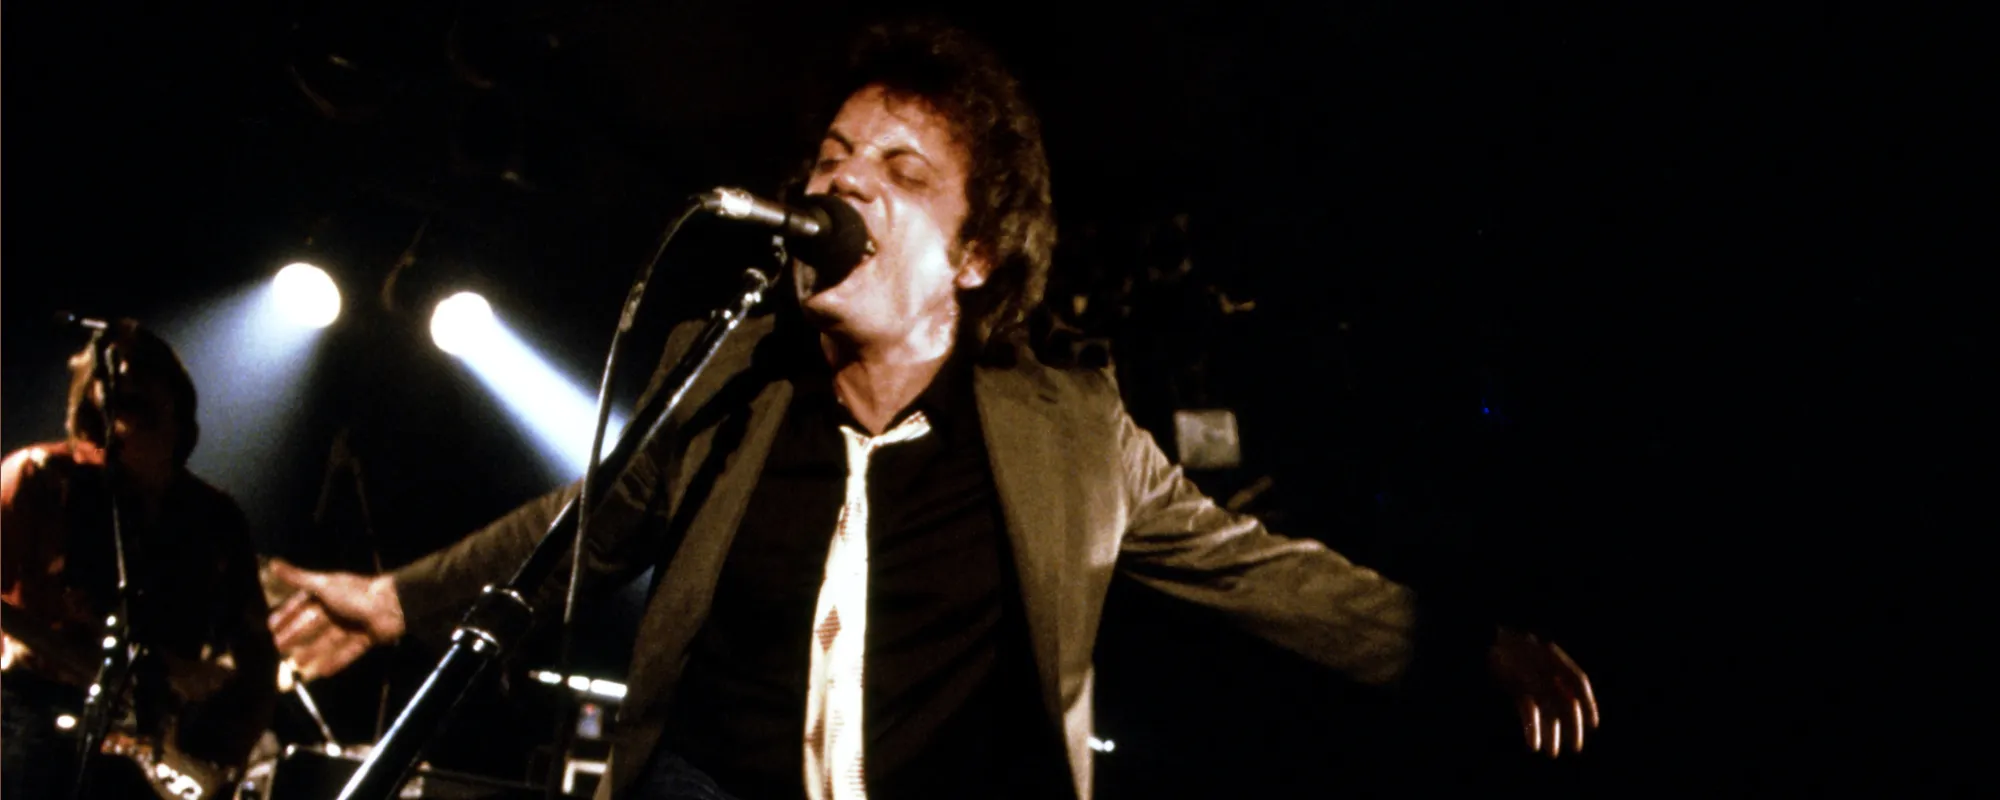 Top 10 Billy Joel Songs (“Piano Man”Aside)